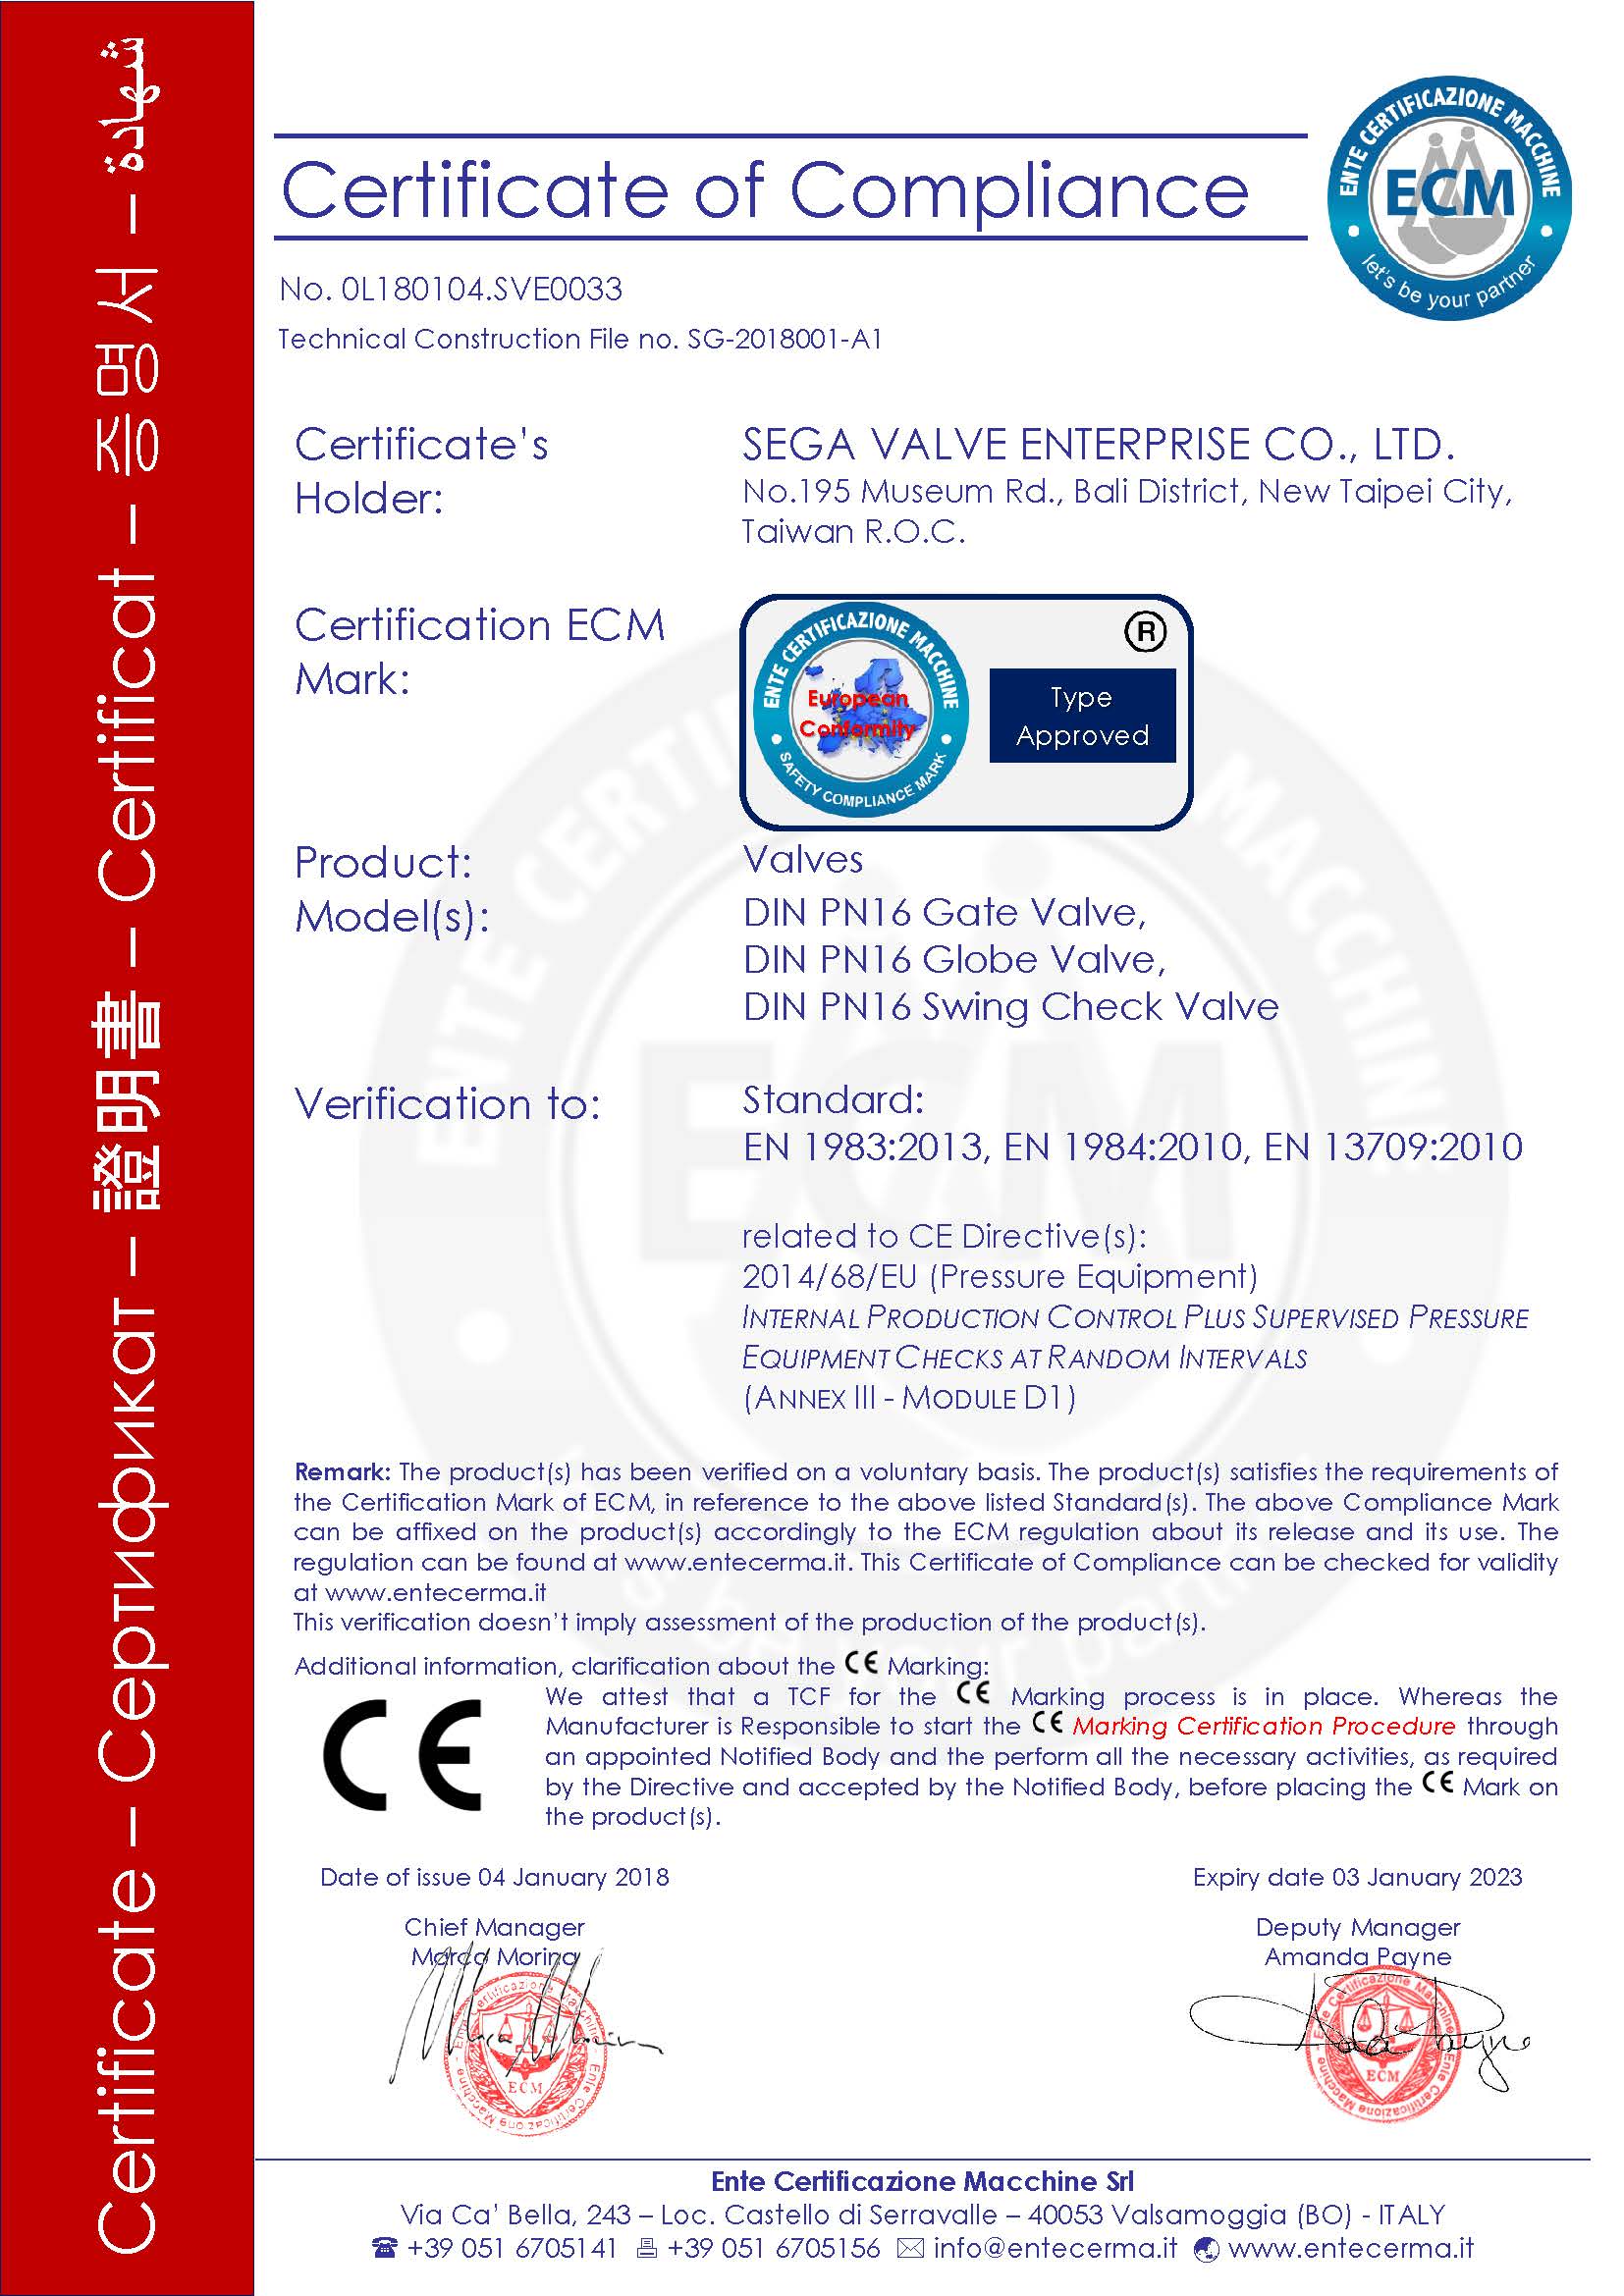 S.G.VALVE's certificate